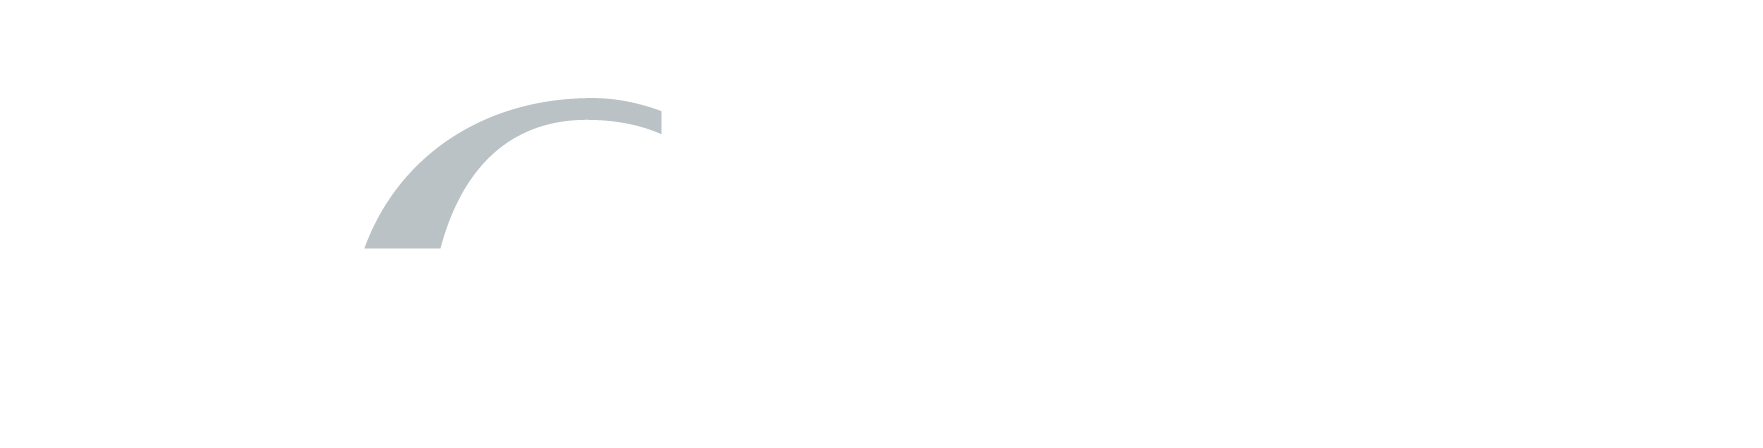 Western Alliance Bank Logo White